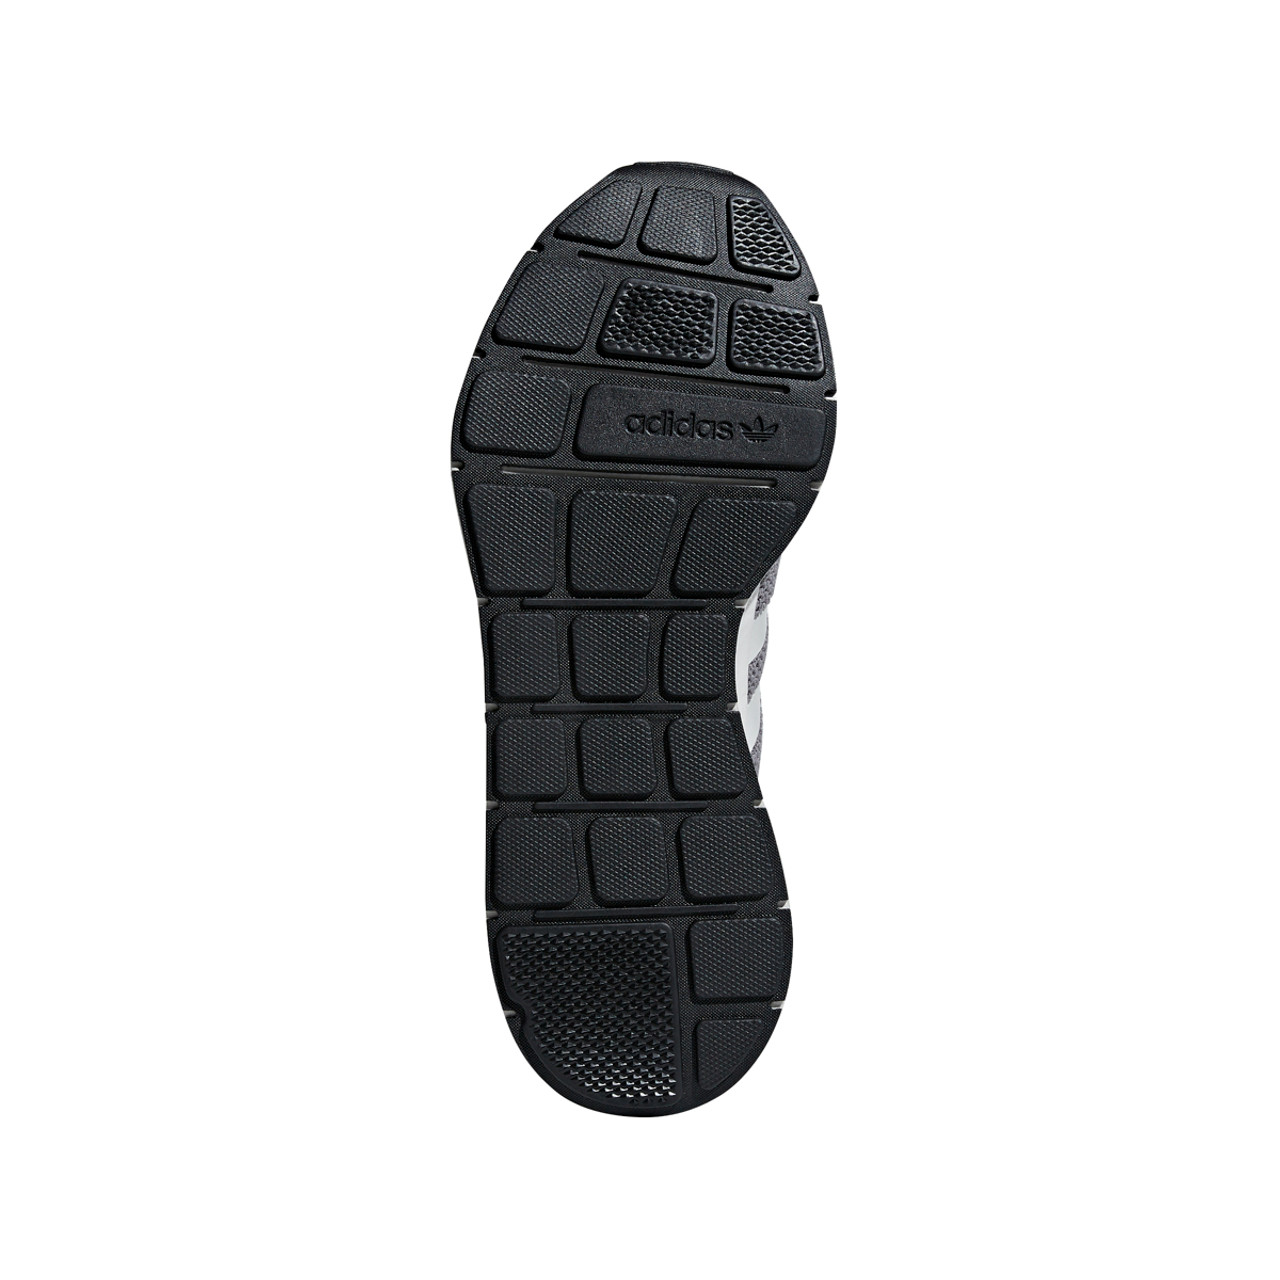 Adidas Swift Runner Shoes Grey Black